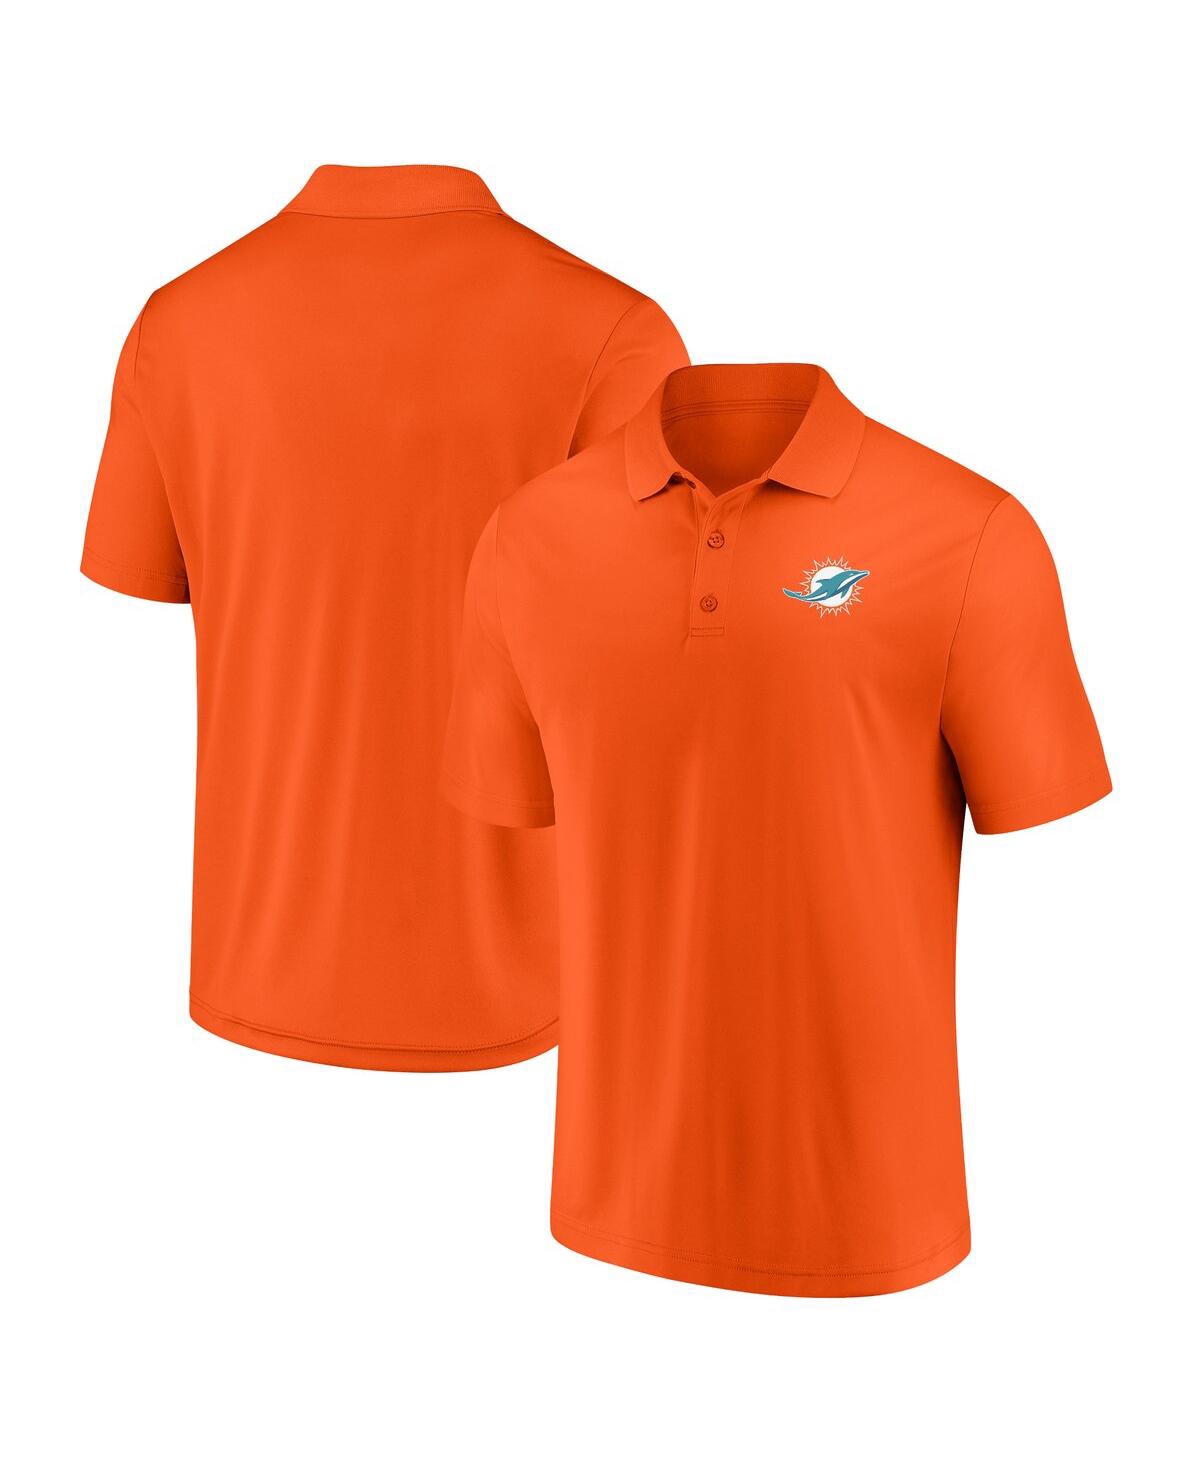 Shop Fanatics Men's  Orange Miami Dolphins Component Polo Shirt